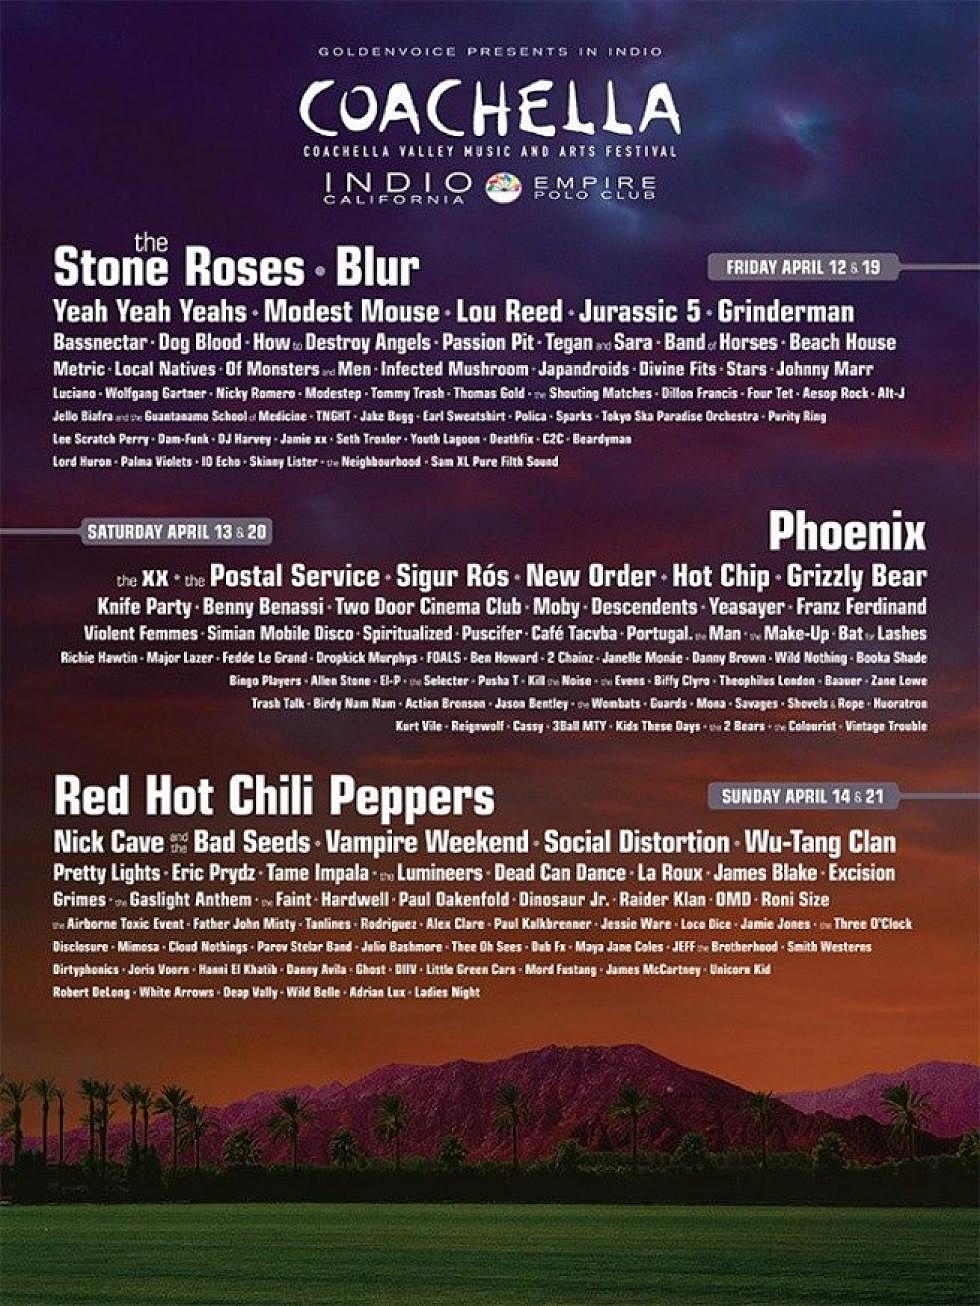 Coachella 2013 Lineup Released